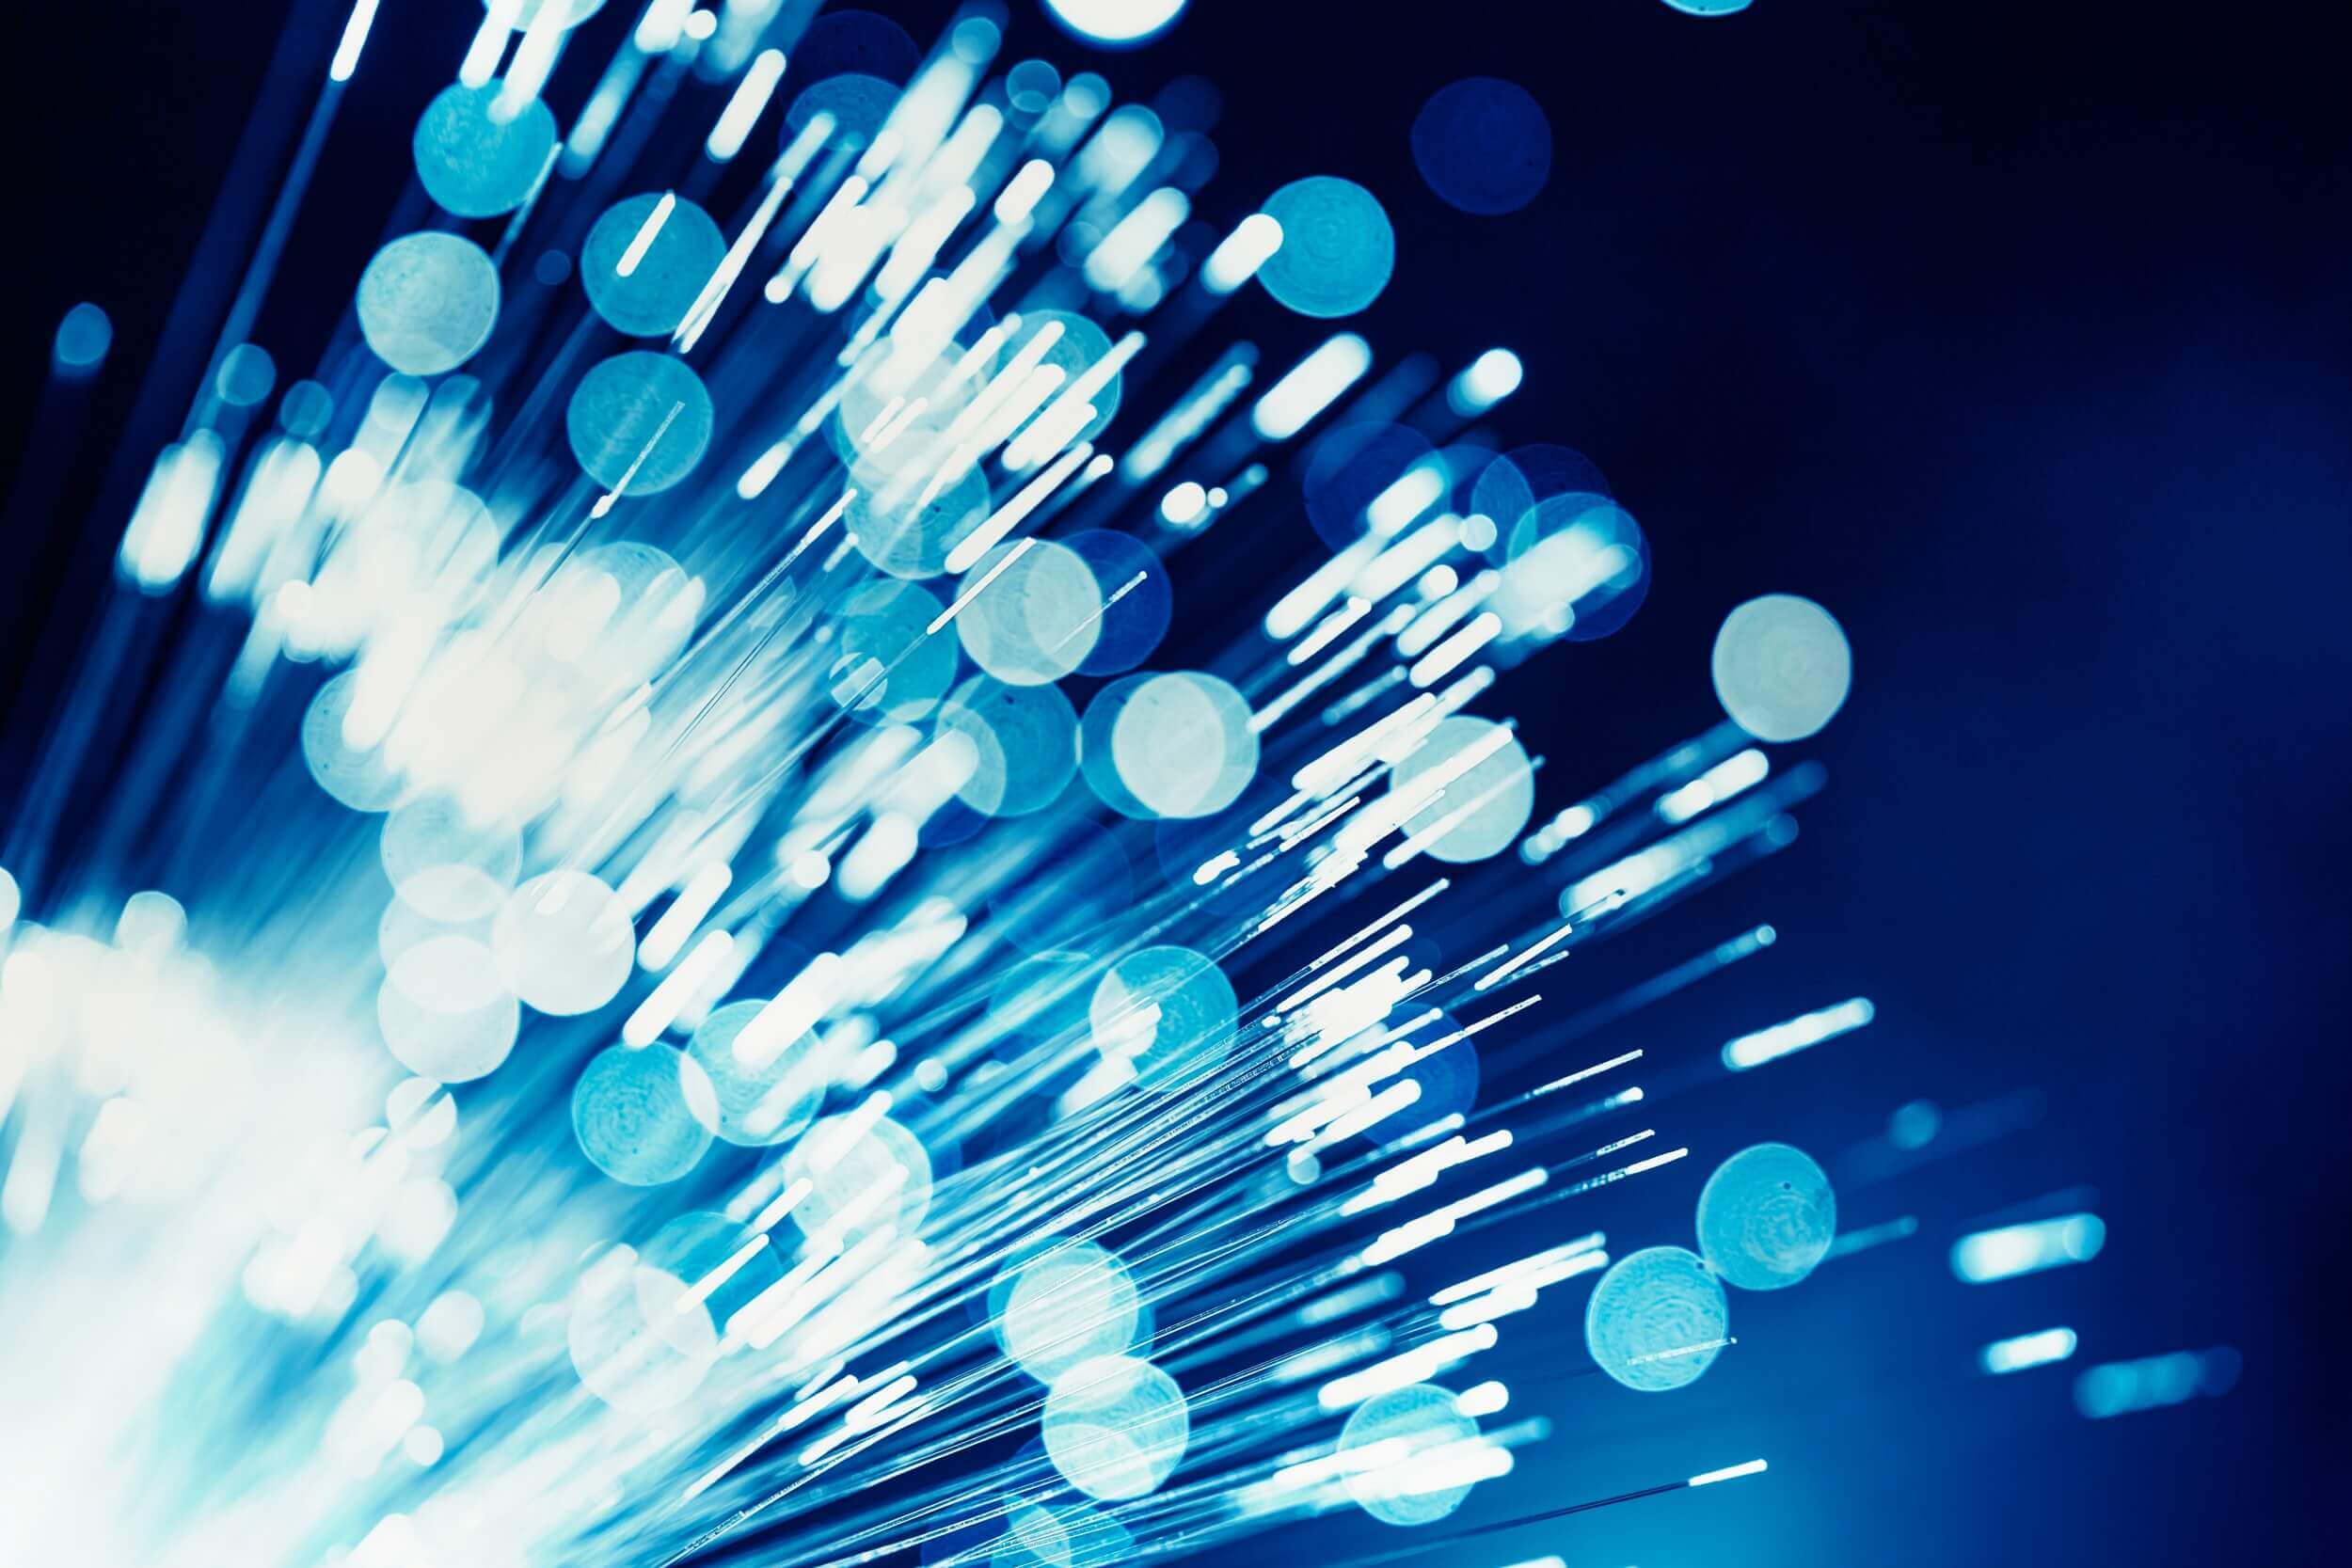 Researchers reach unseen data transmission speeds by tweaking fiber optics